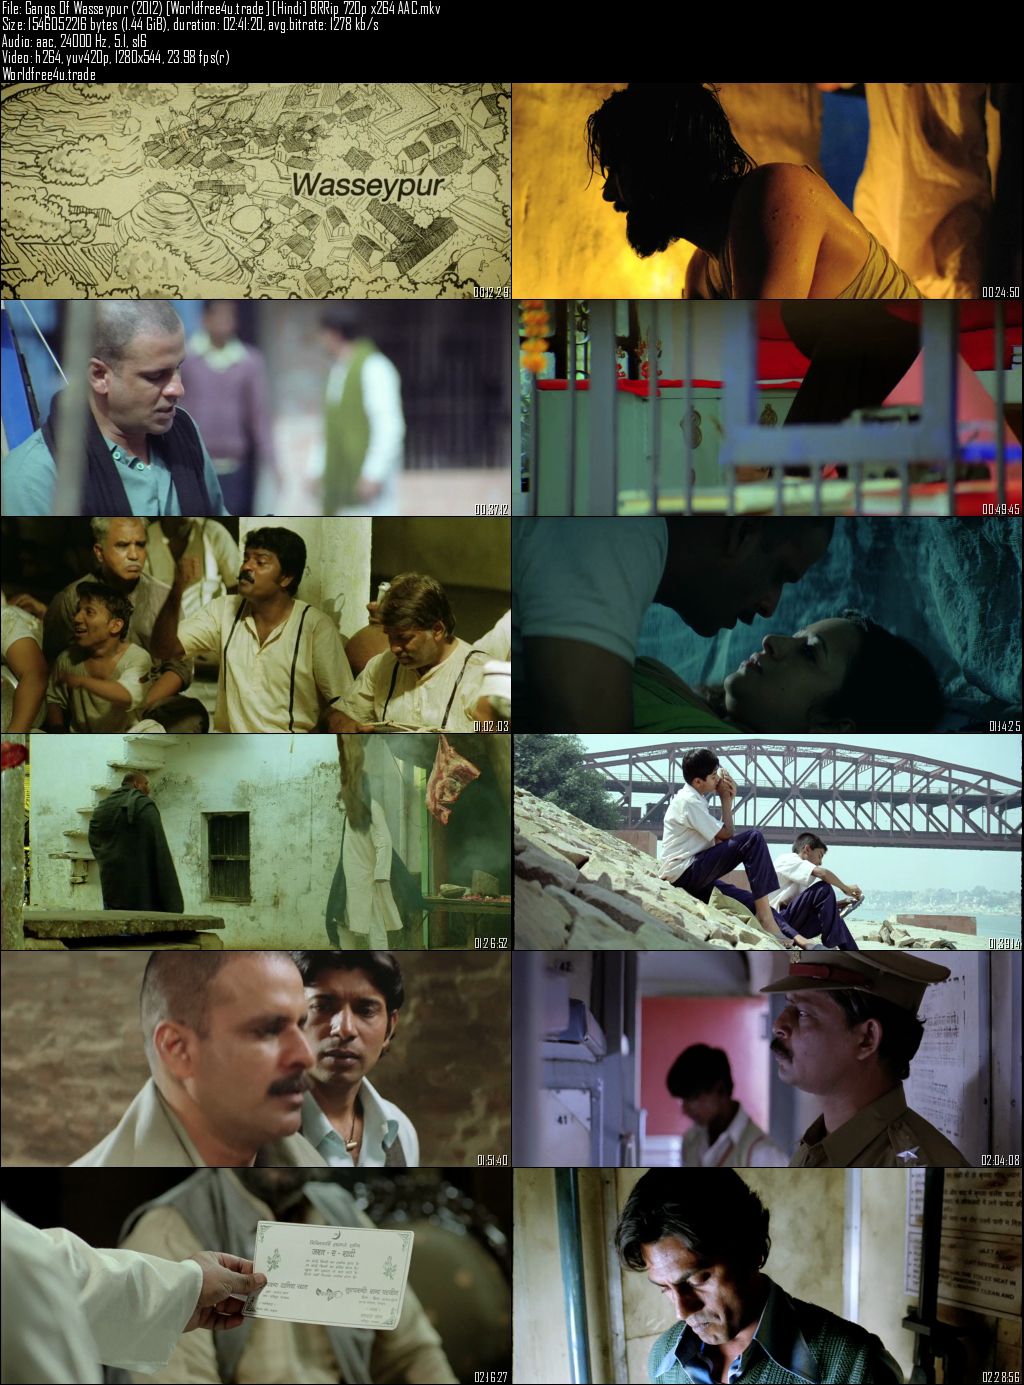 gangs of wasseypur 2 full movie online on megavideo